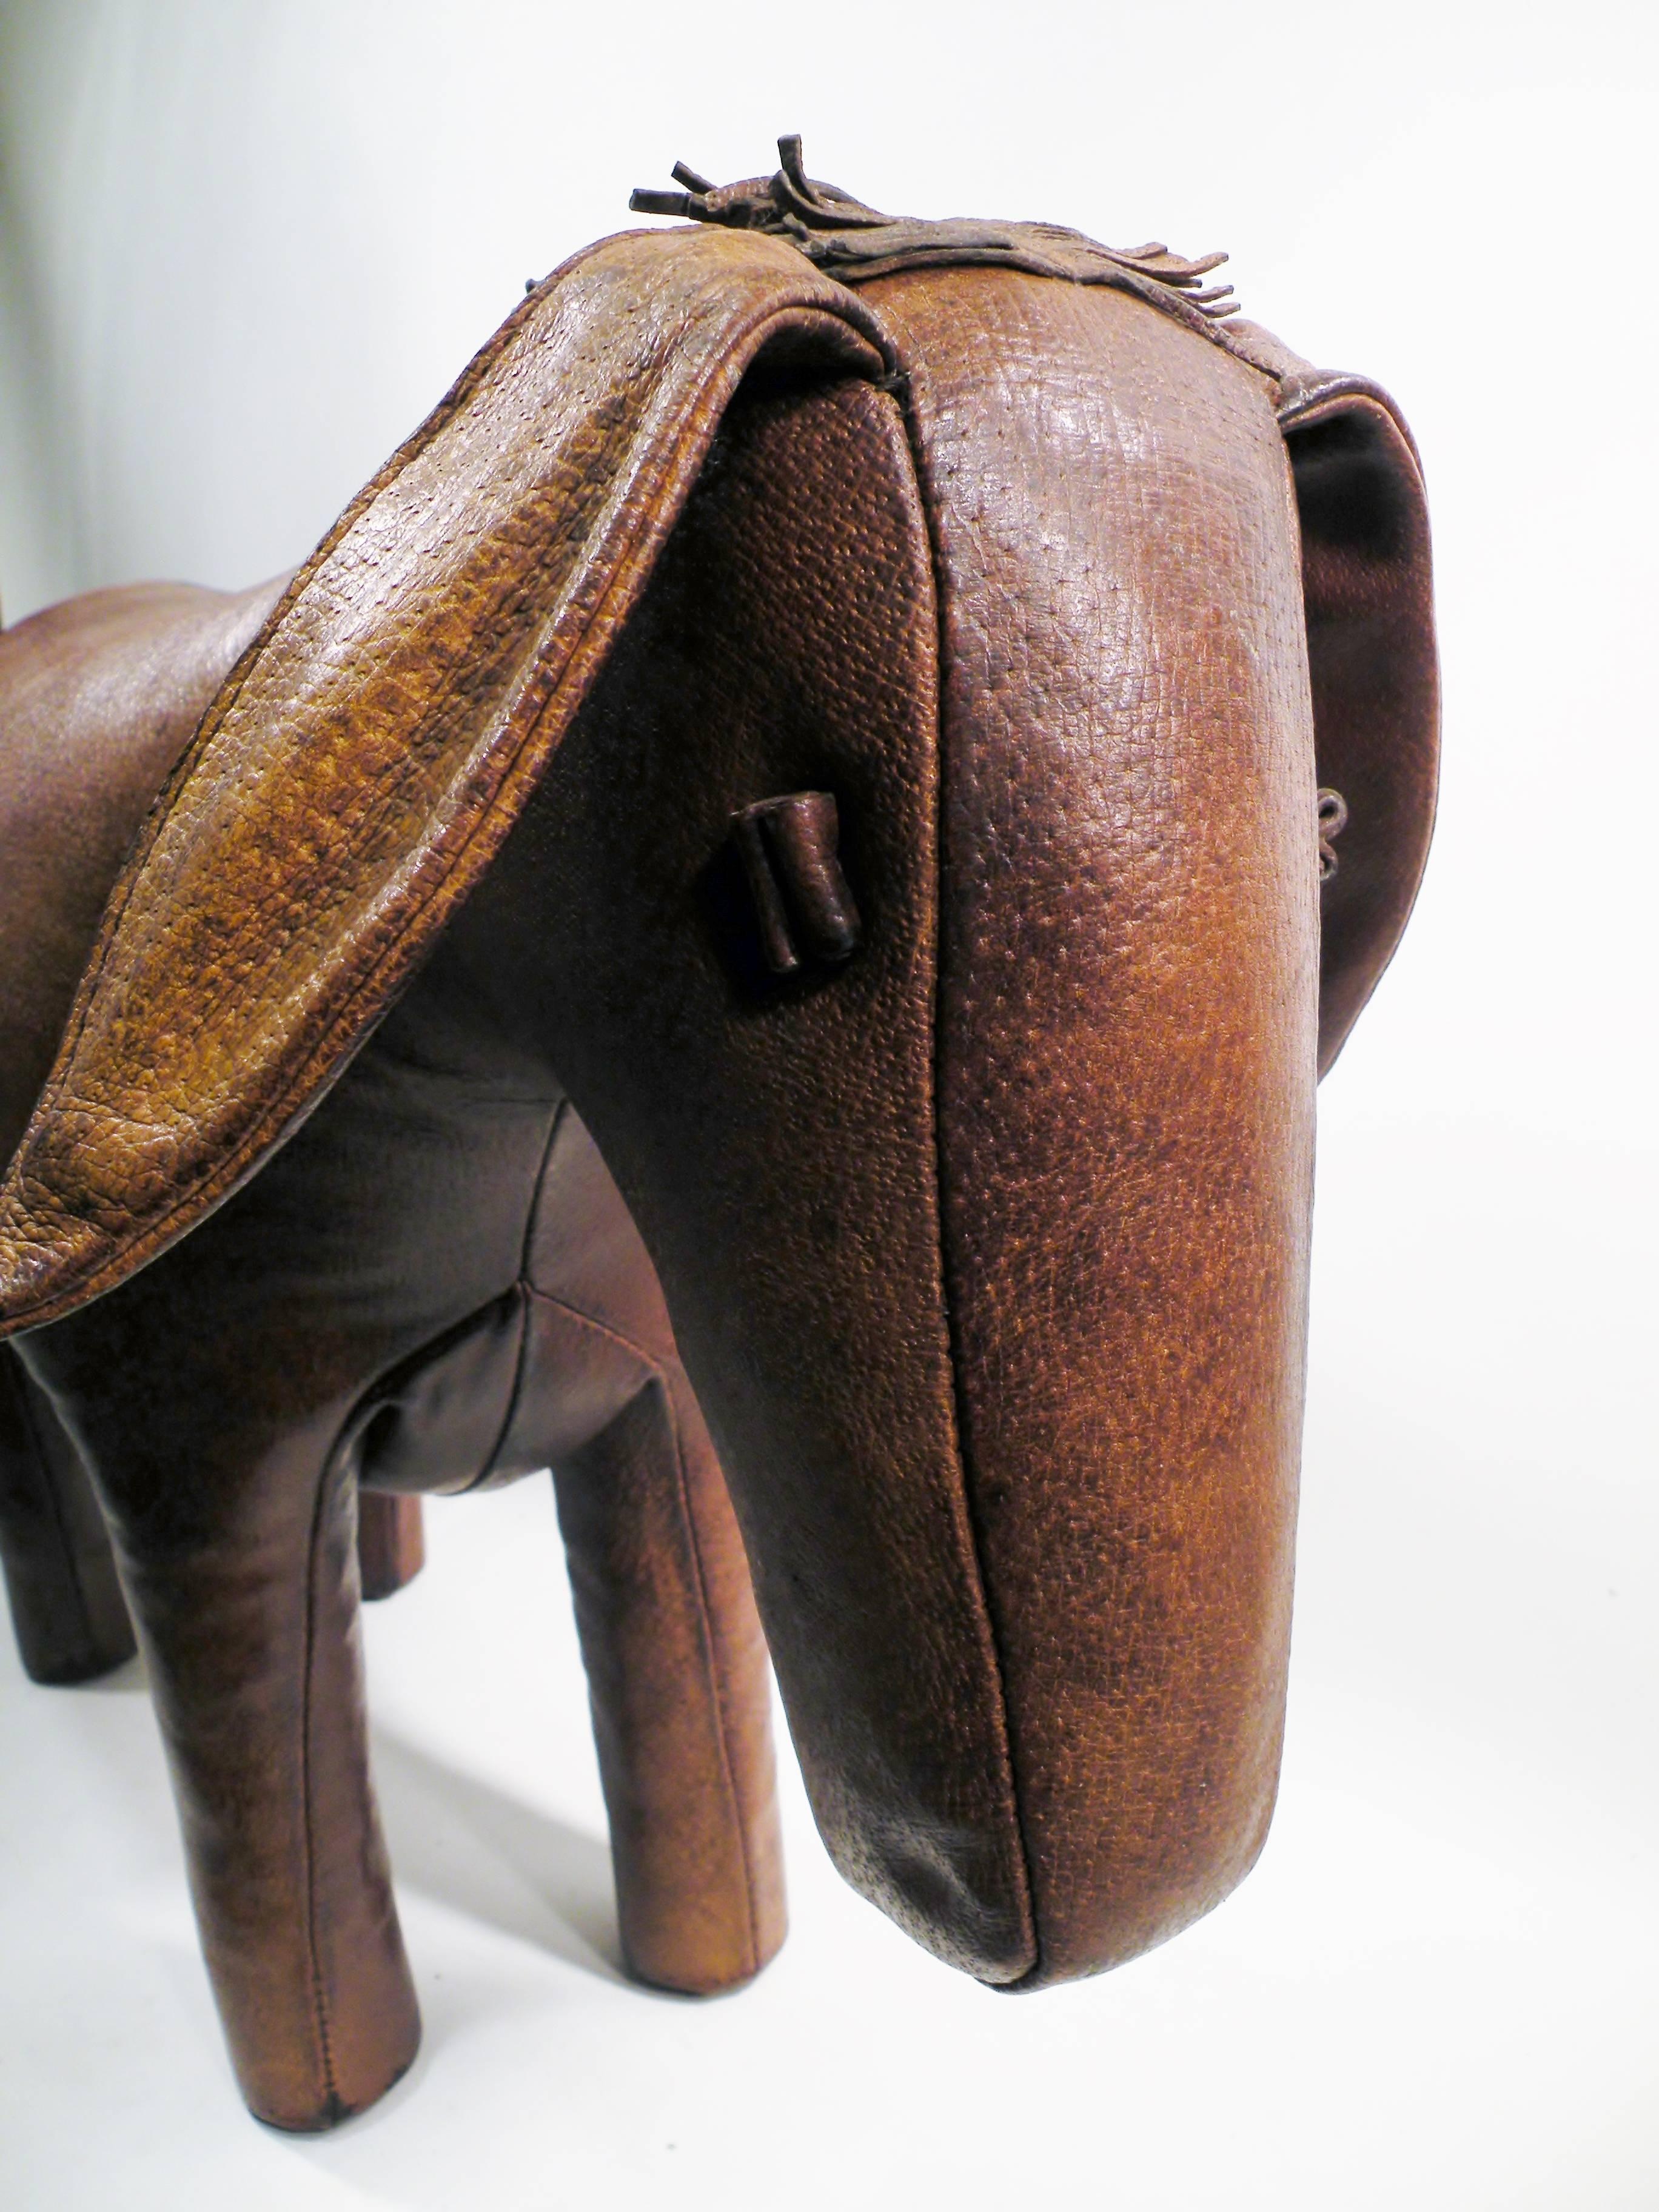 Mid-Century Modern Dimitri Omersa Leather Donkey Ottoman Footstool Abercrombie & Fitch